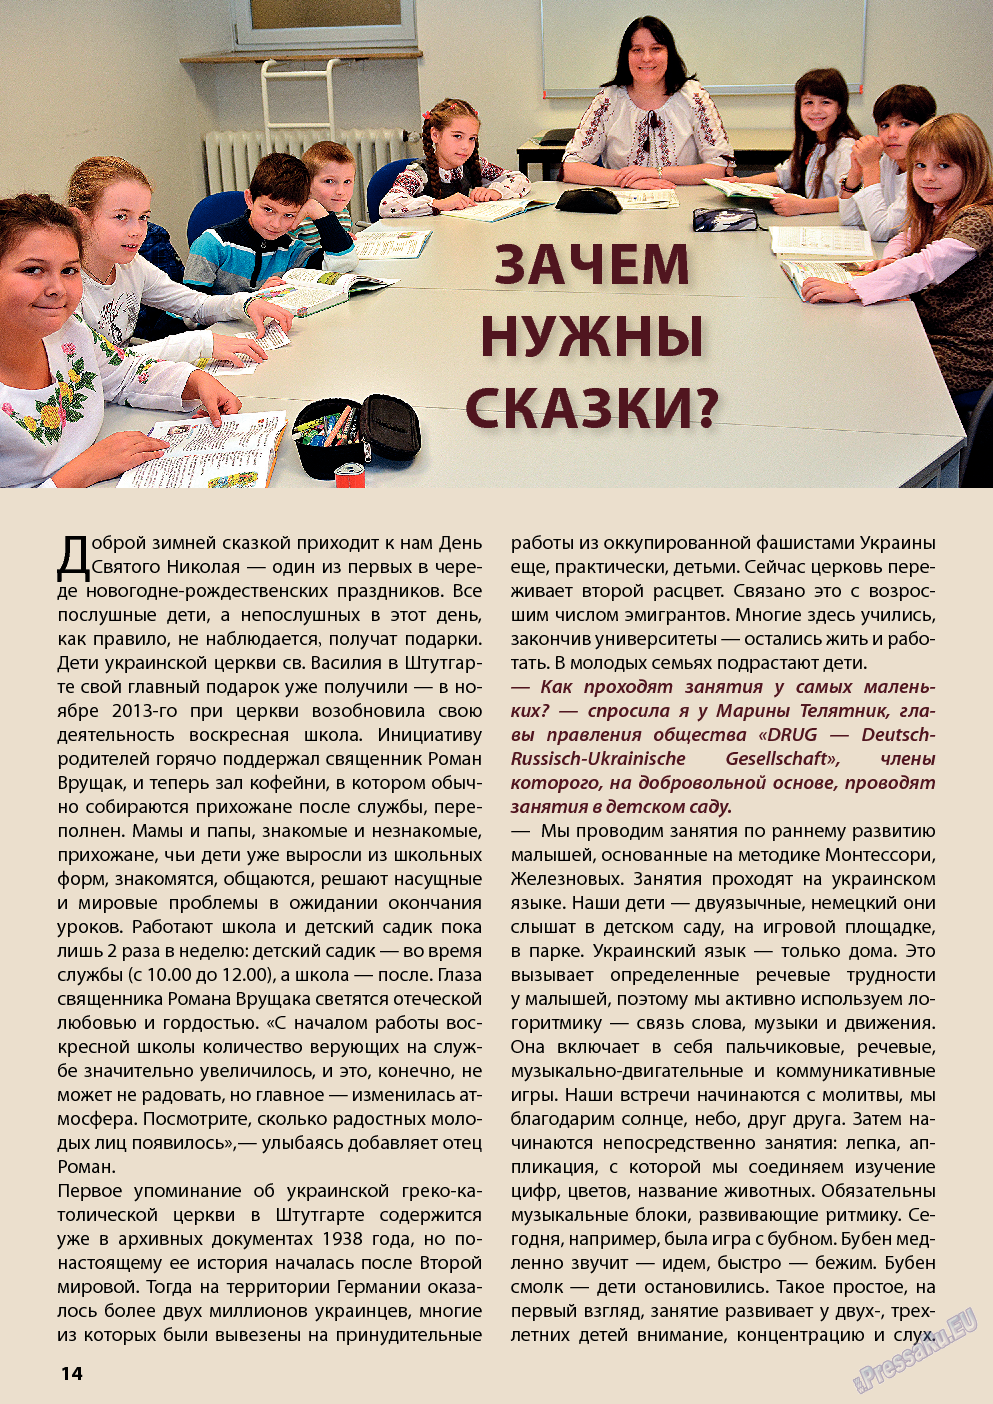 Wadim, журнал. 2013 №12 стр.14